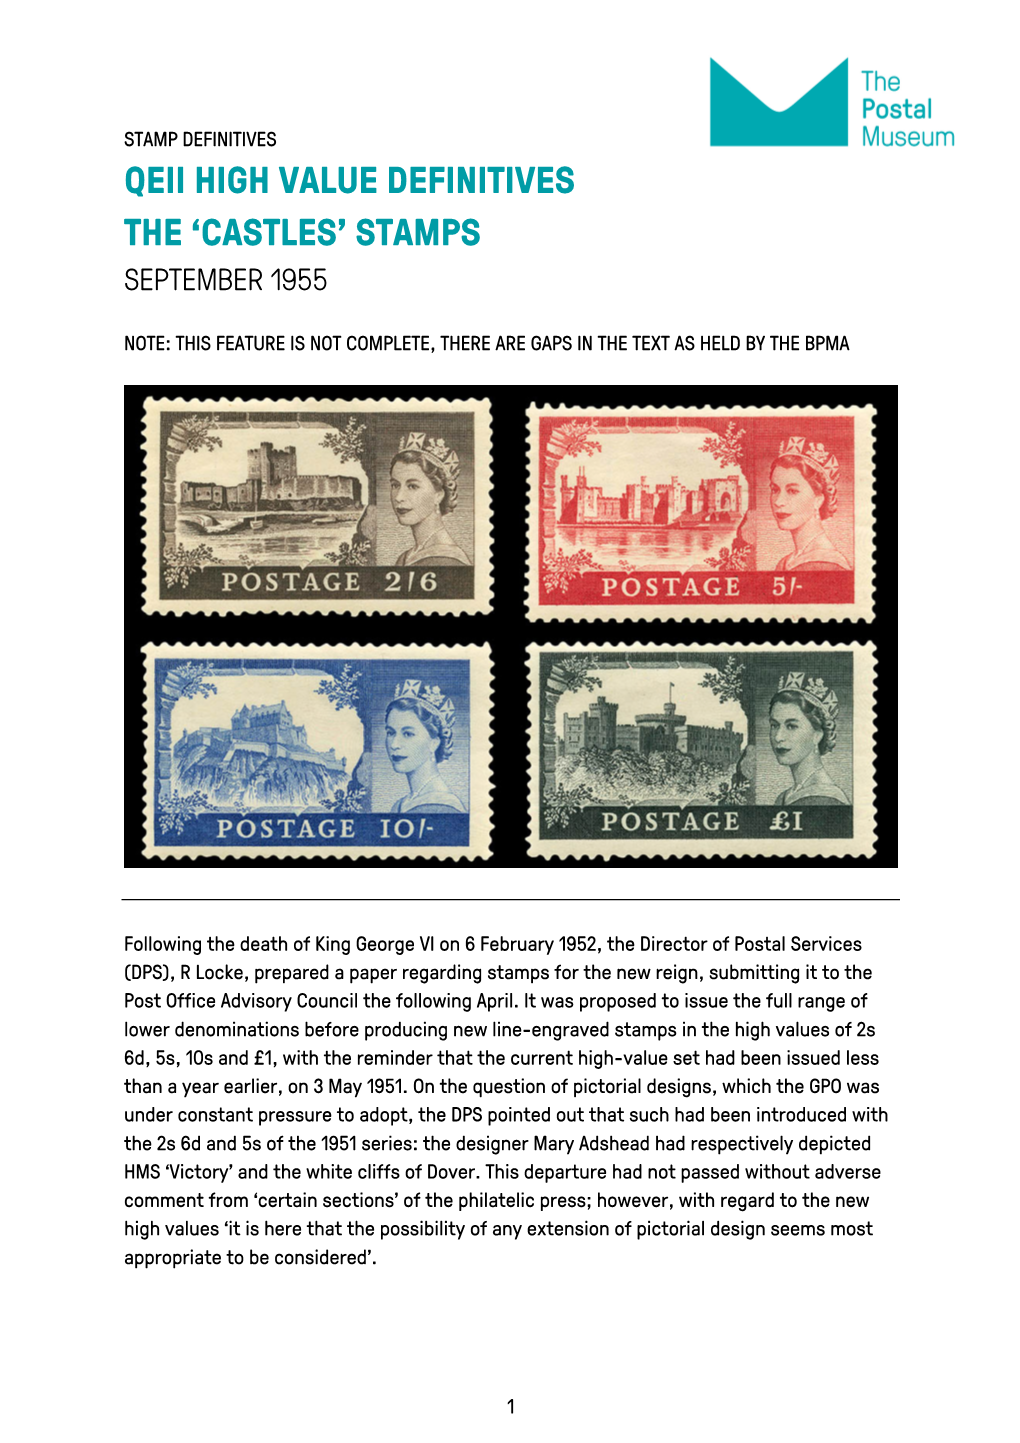 Qeii High Value Definitives the 'Castles' Stamps